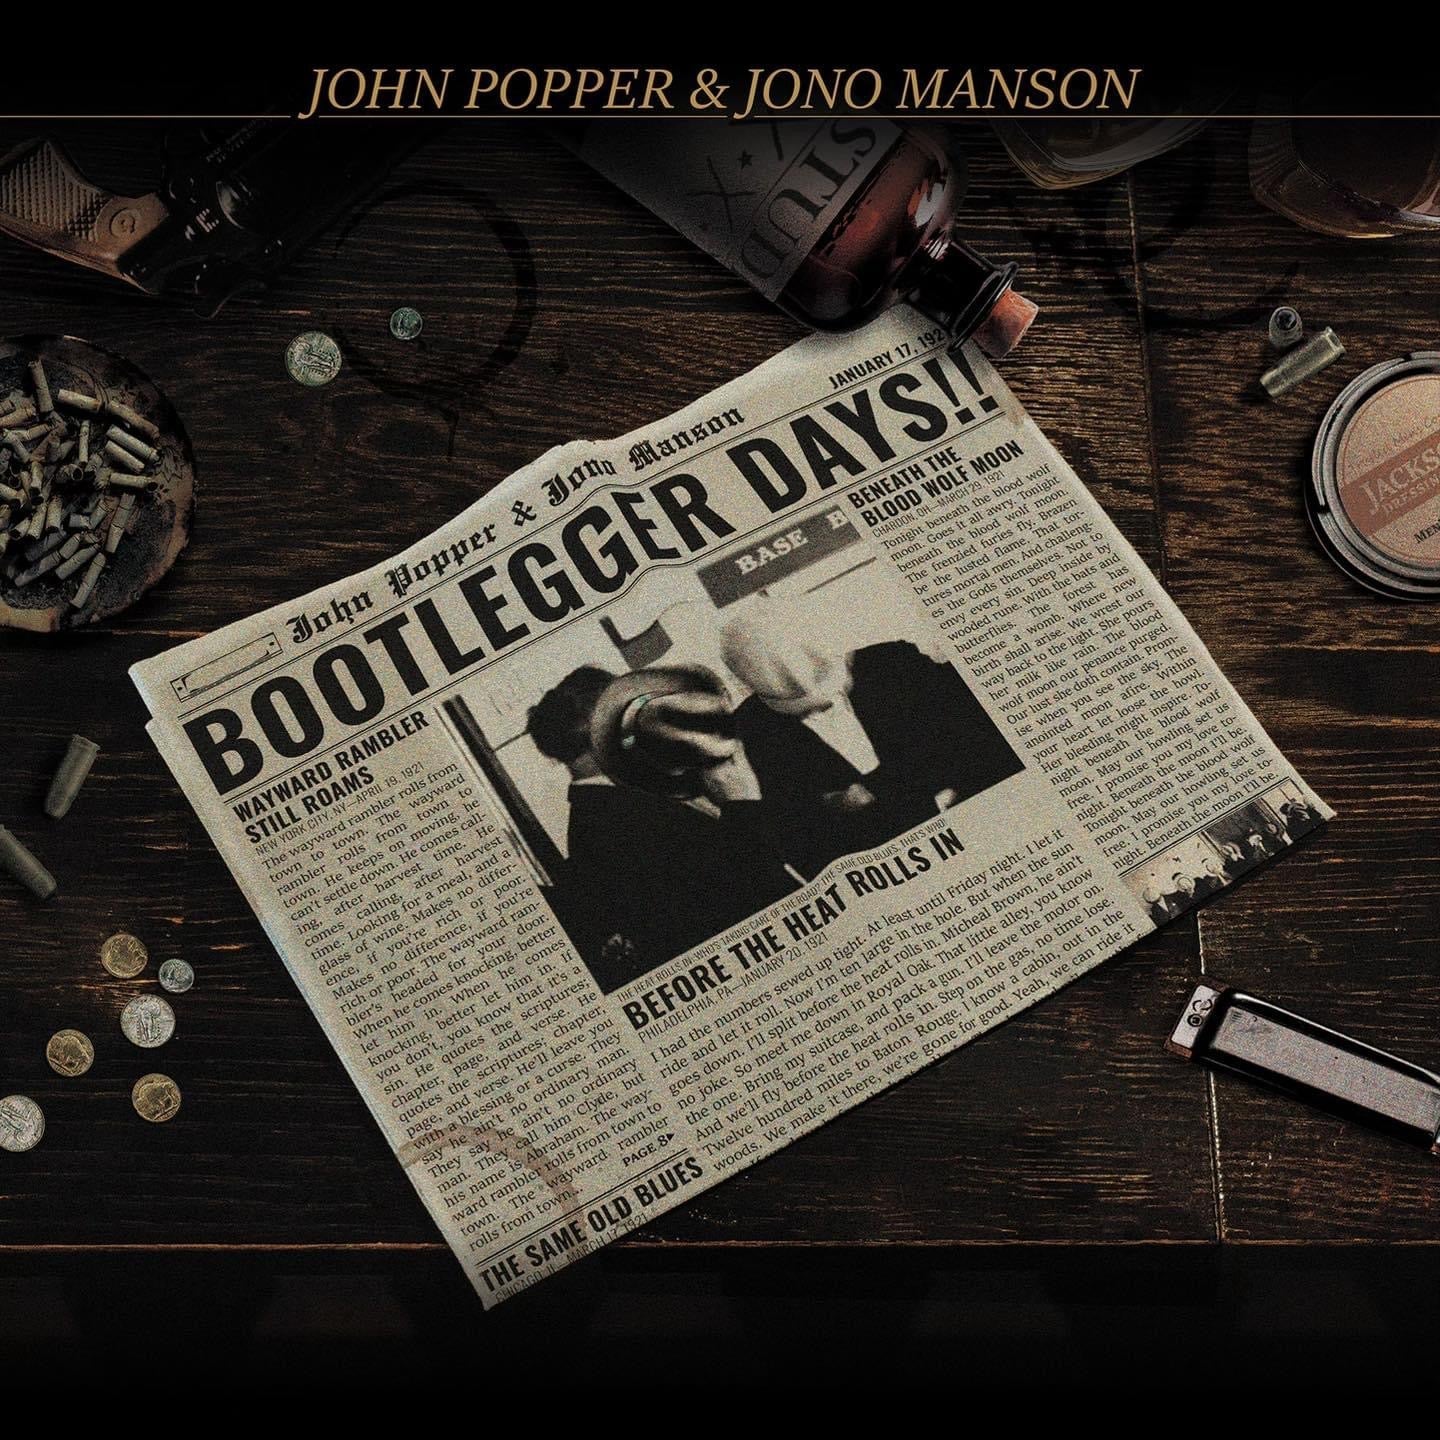 John Popper & Jono Manson - Bootlegger Days!! Blood Wolf Moon Vinyl LP